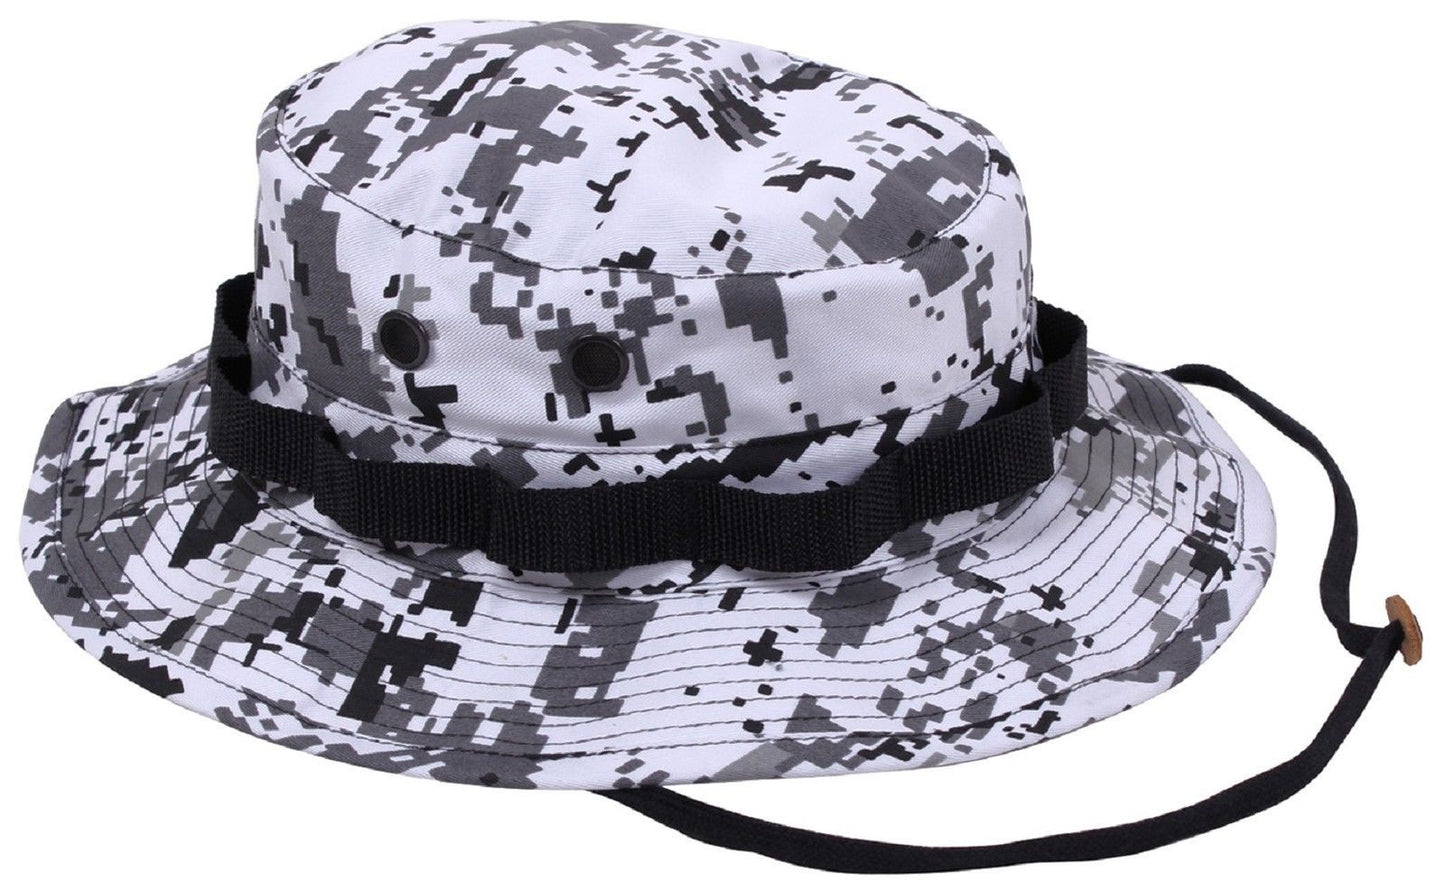 City Digital Camouflage Boonie Hat - Black & White Camo Bucket Hats w Chin Strap